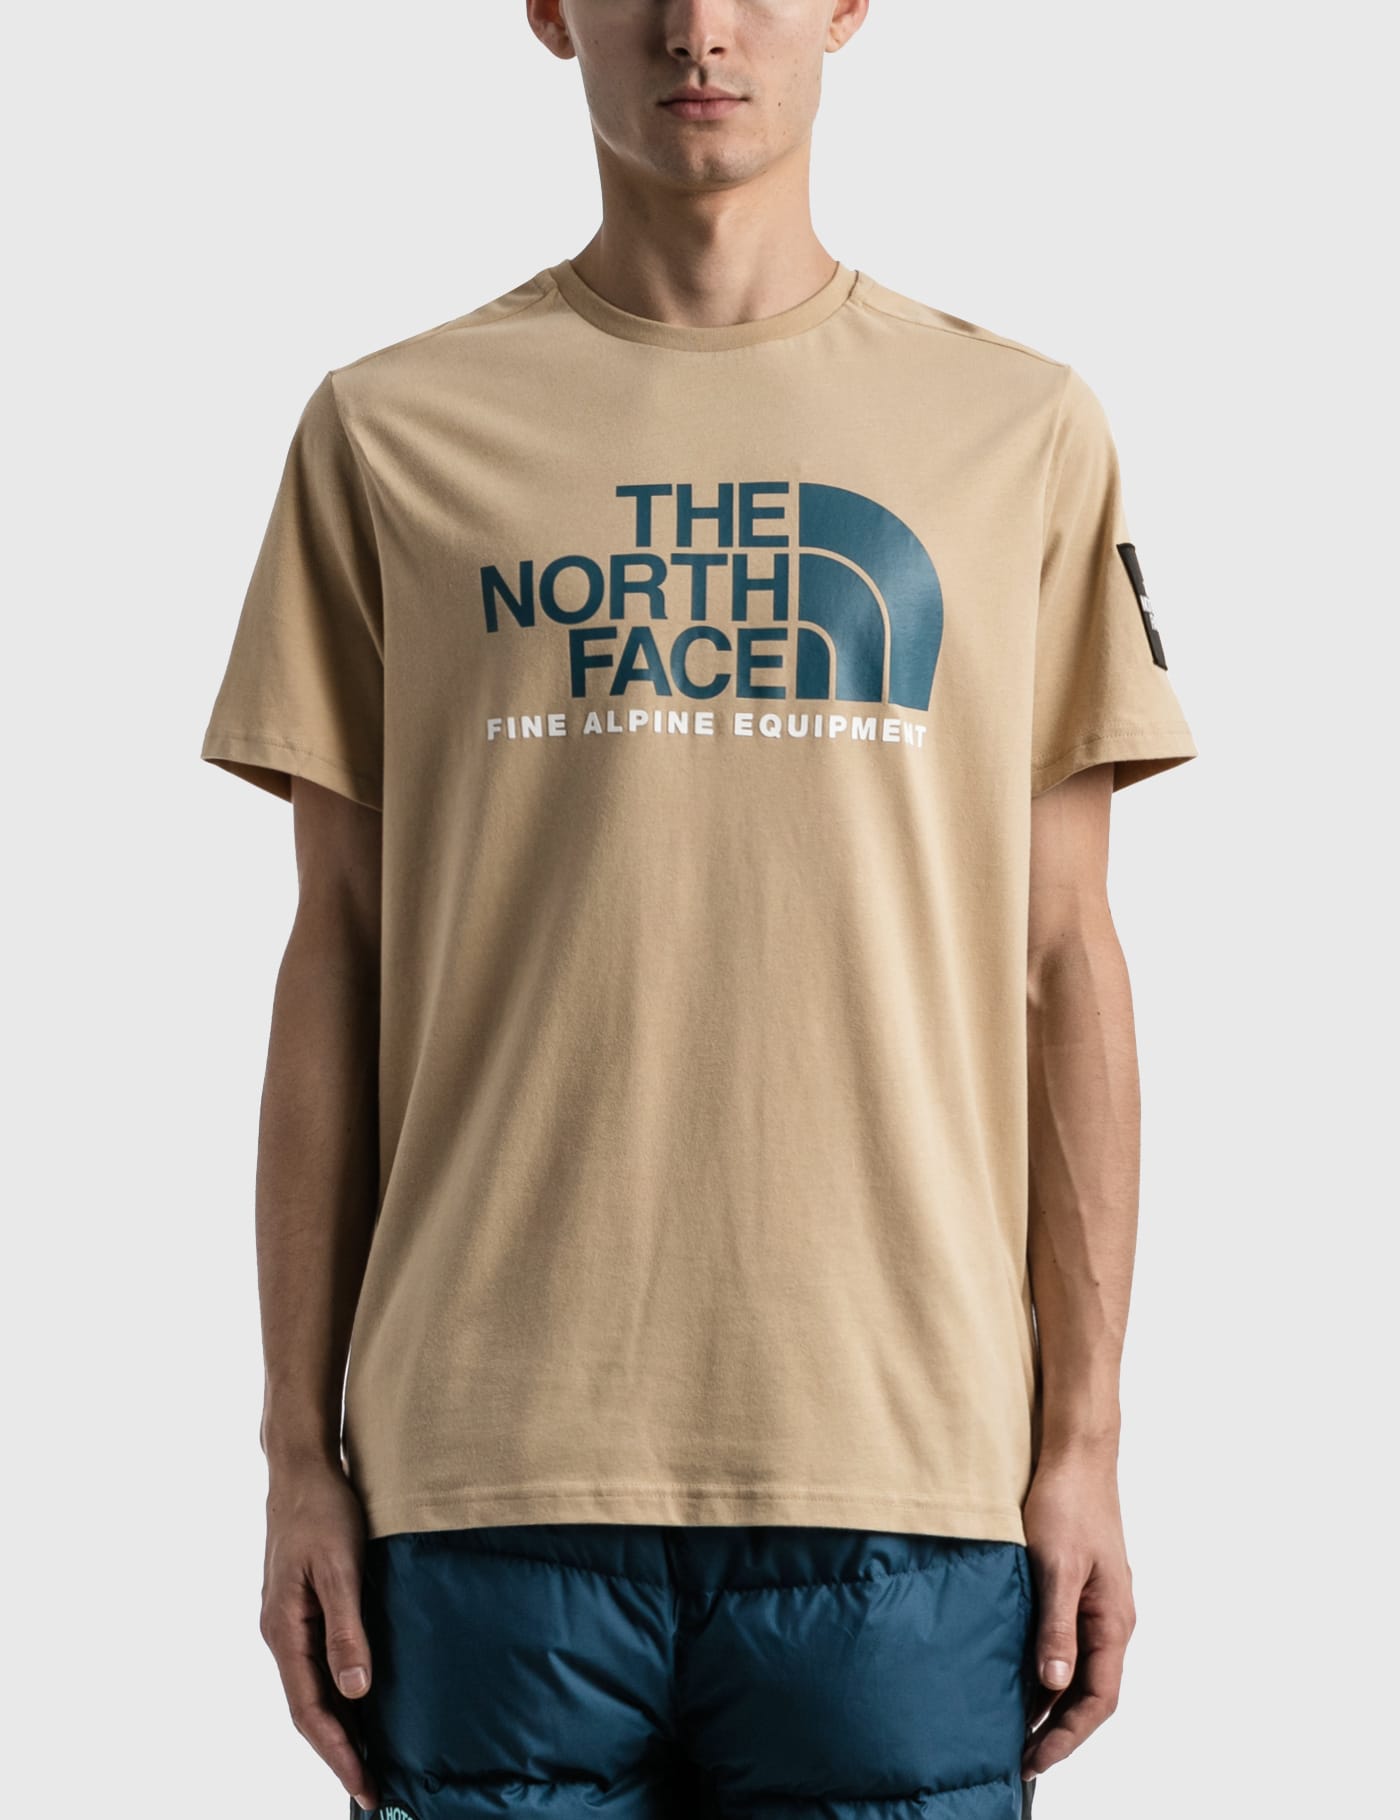 The North Face - Fine Alpine T-shirt | HBX